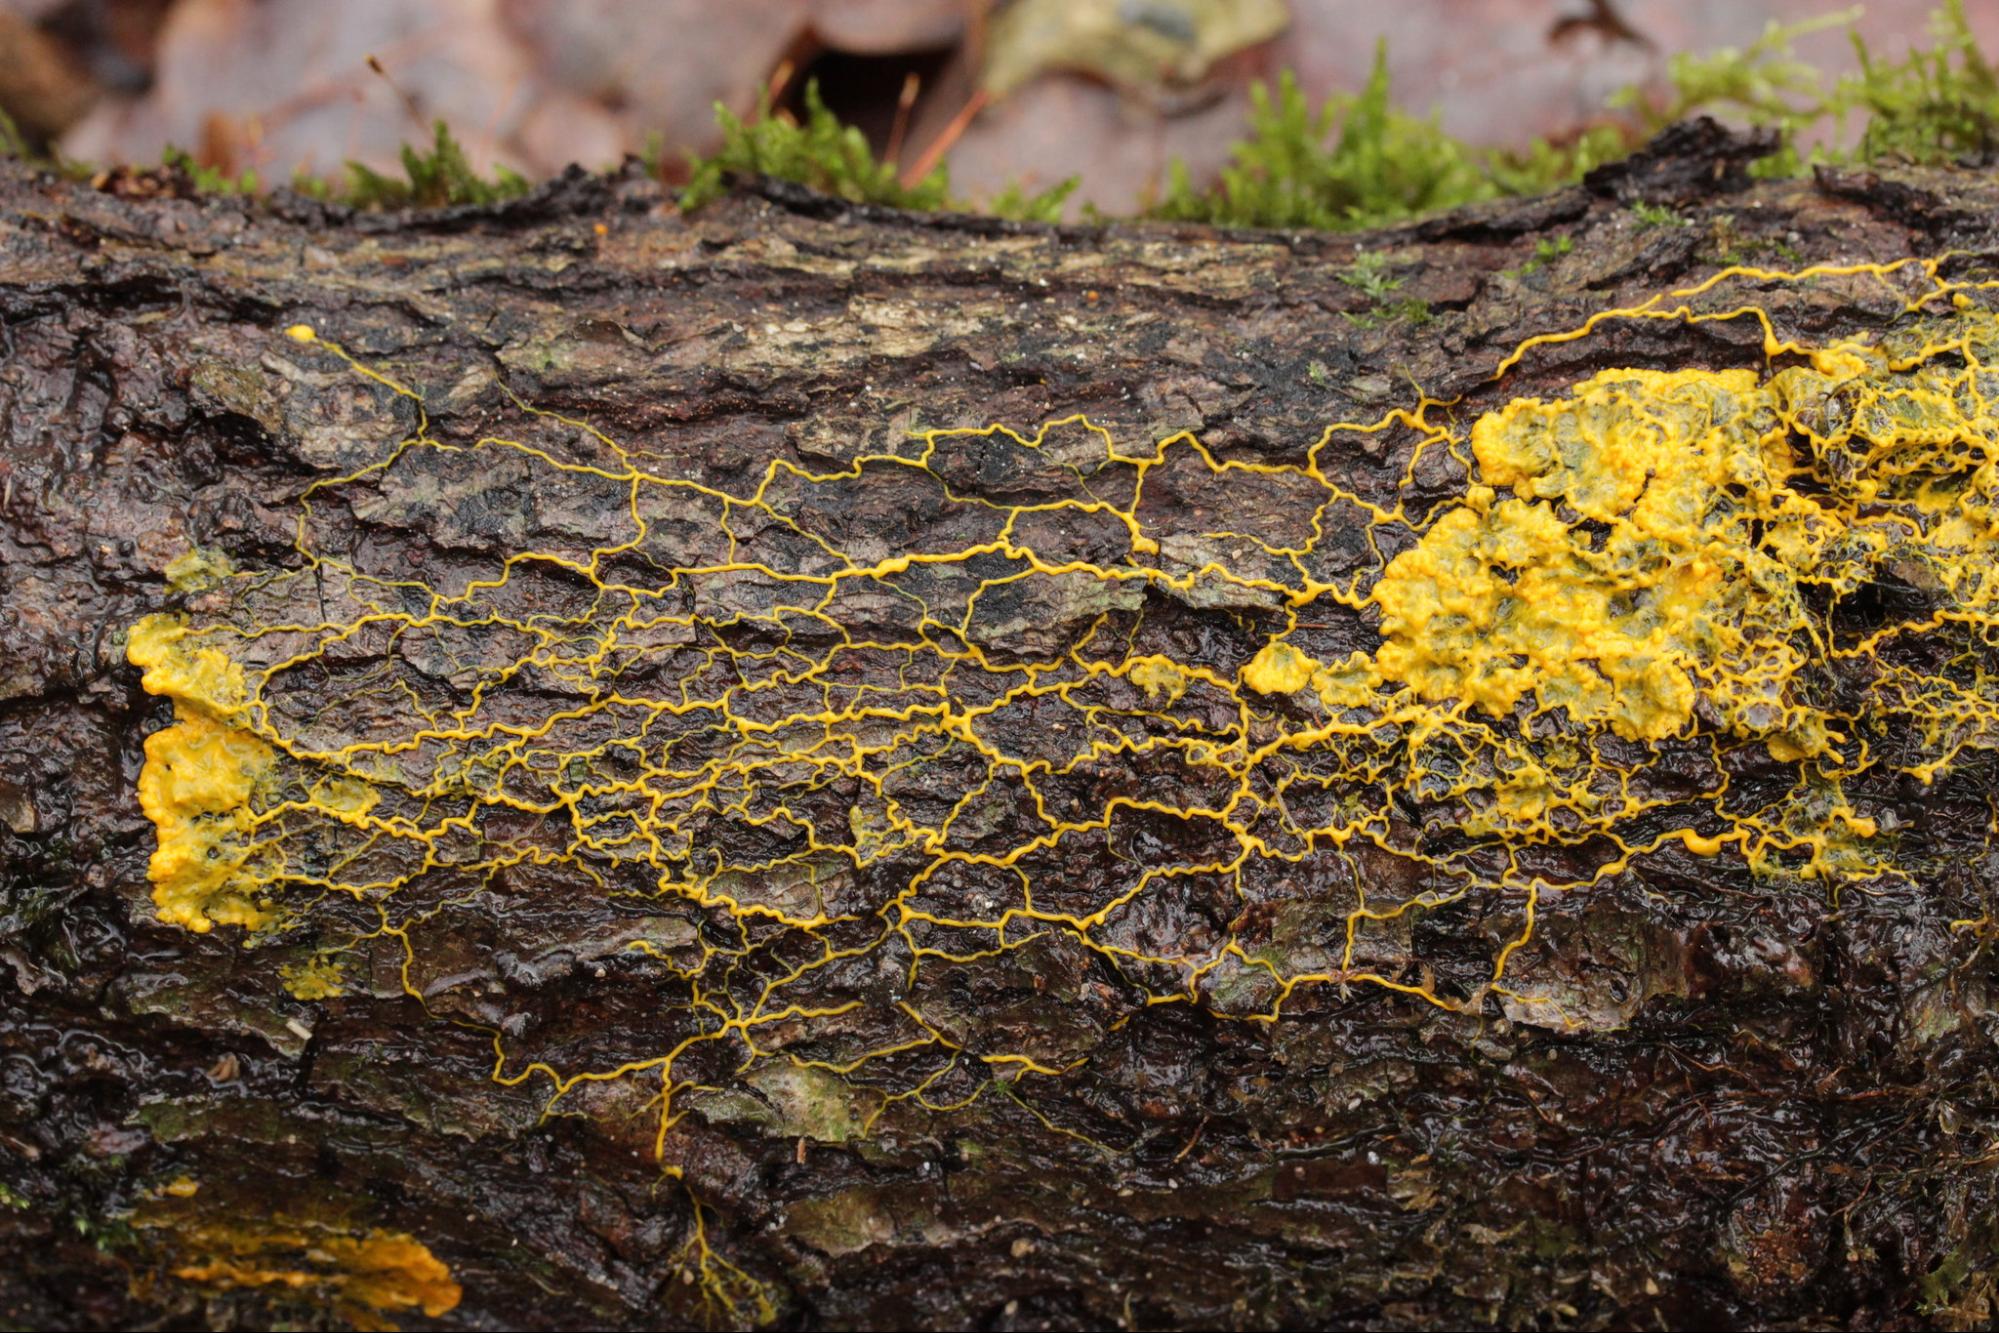 A slime mold on a log